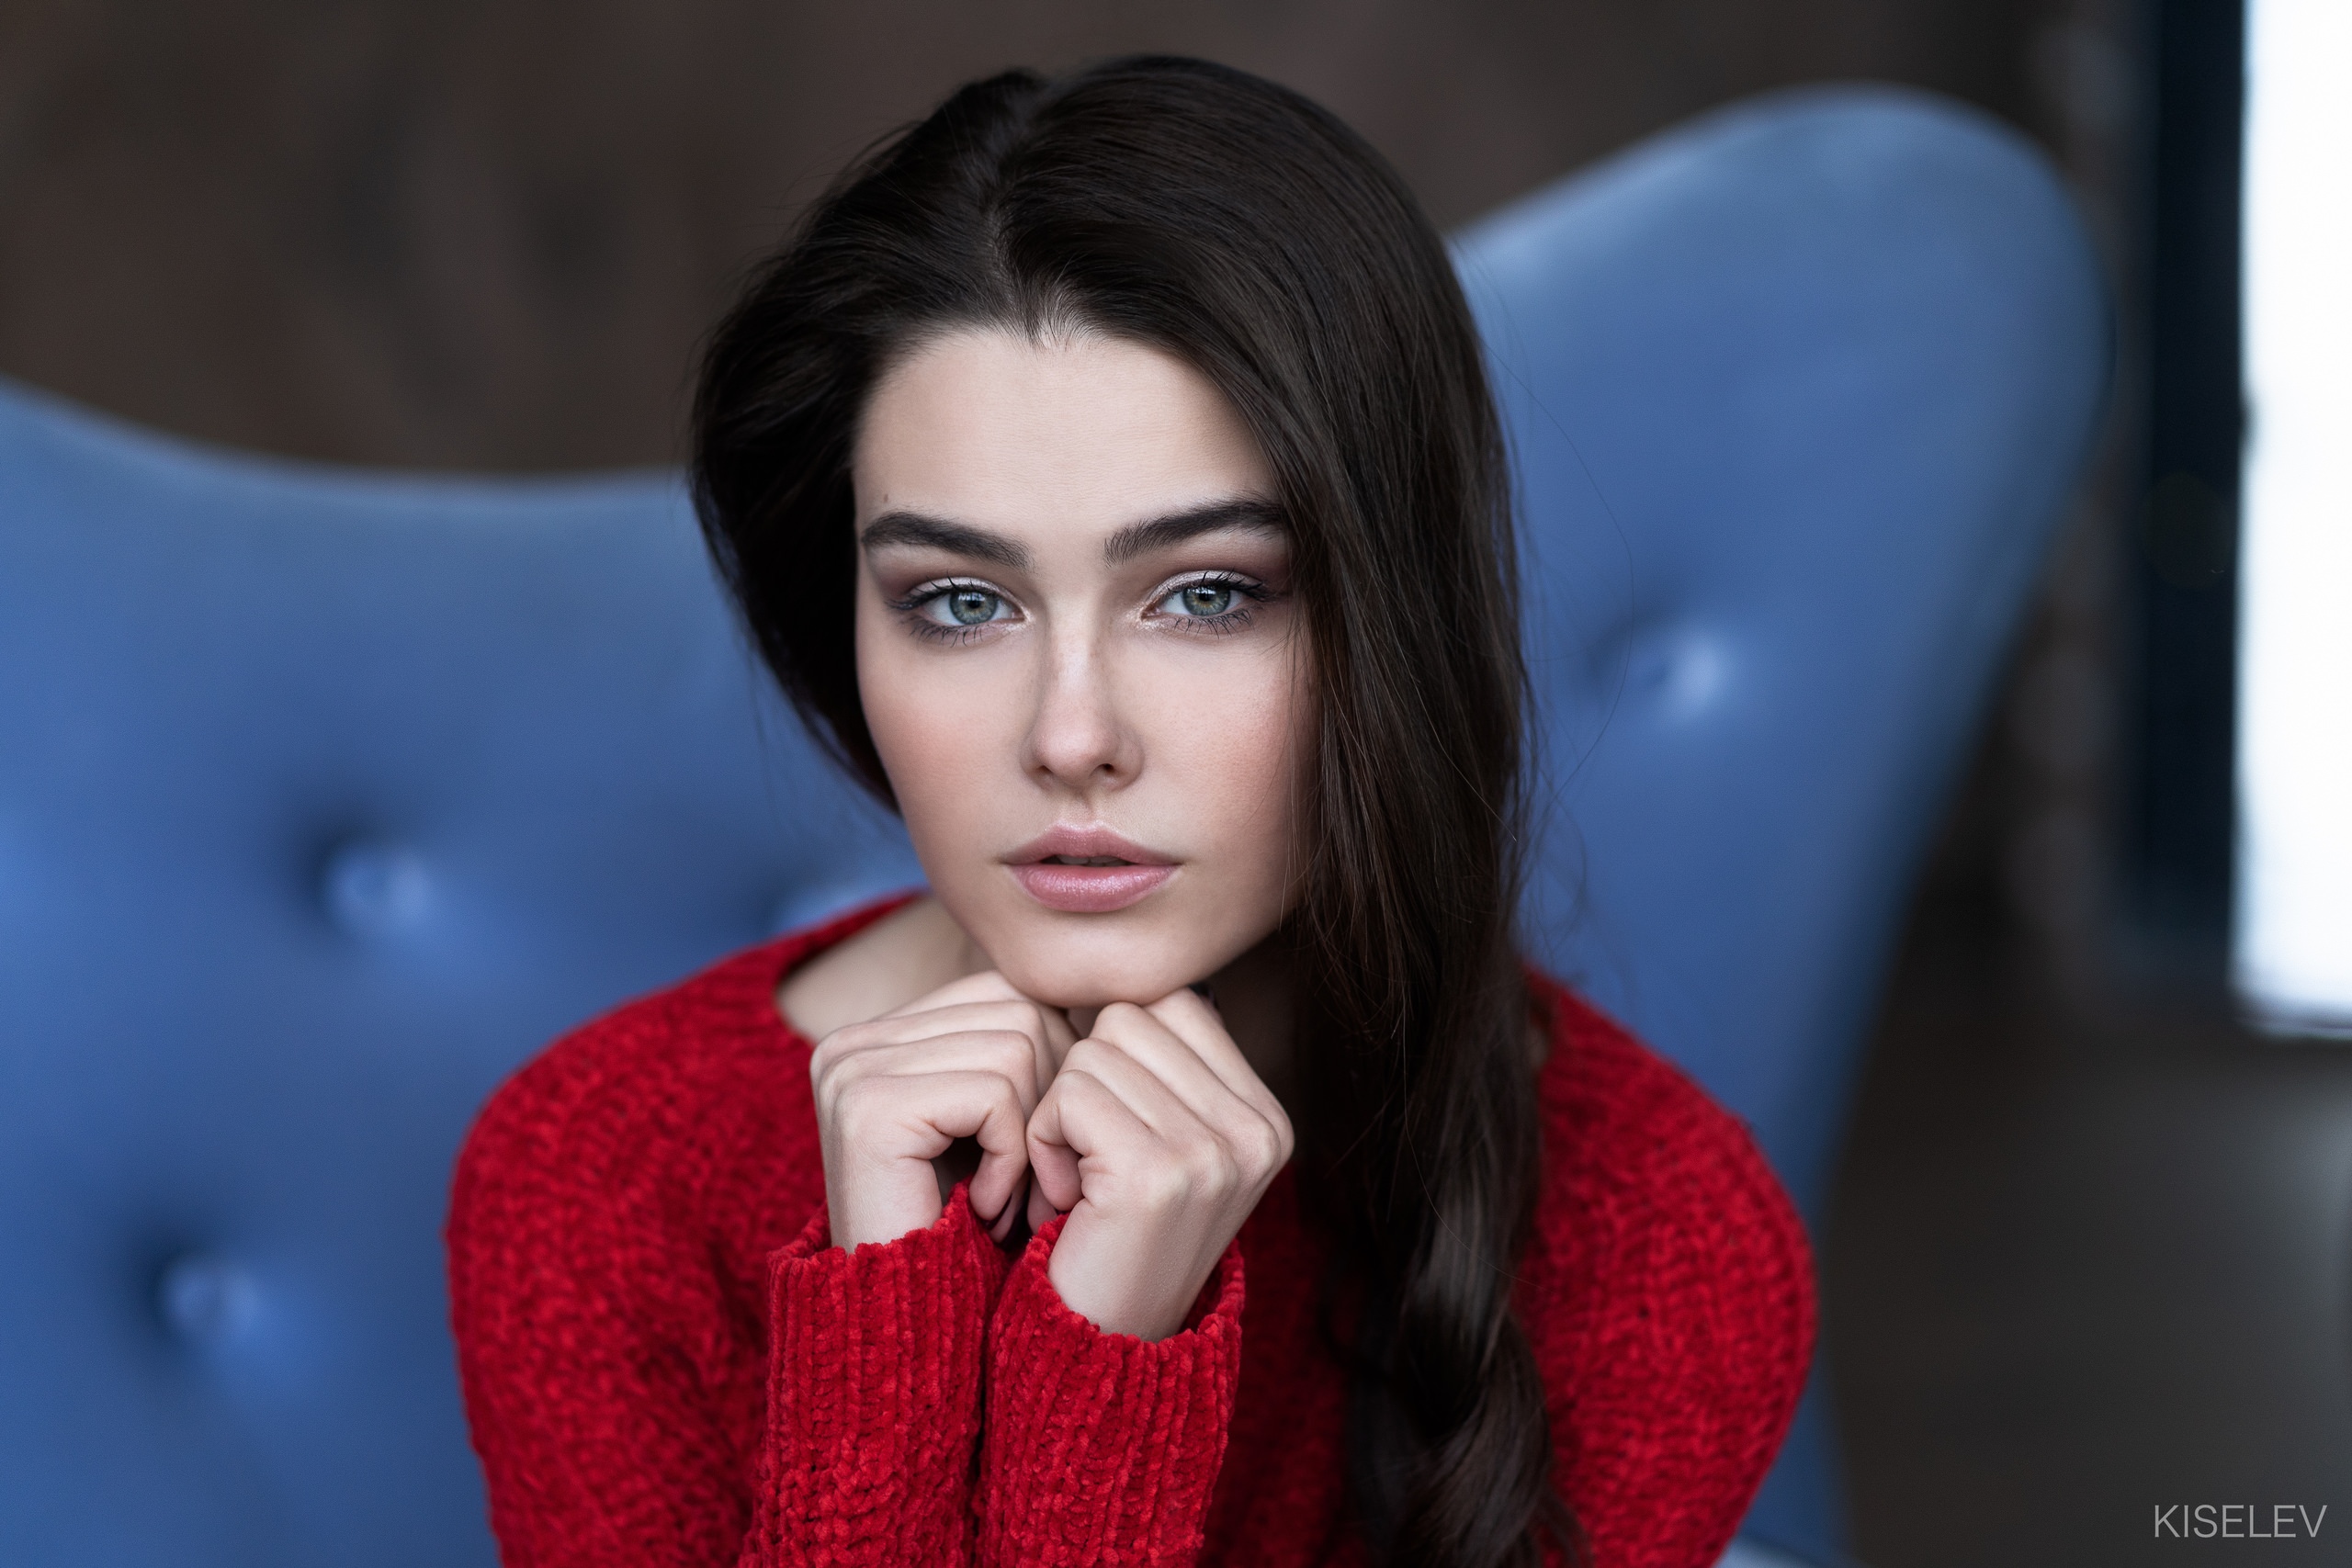 Women Portrait Long Hair Face Pink Lipstick Red Sweater Alexander Kiselev Bogdana 2560x1707